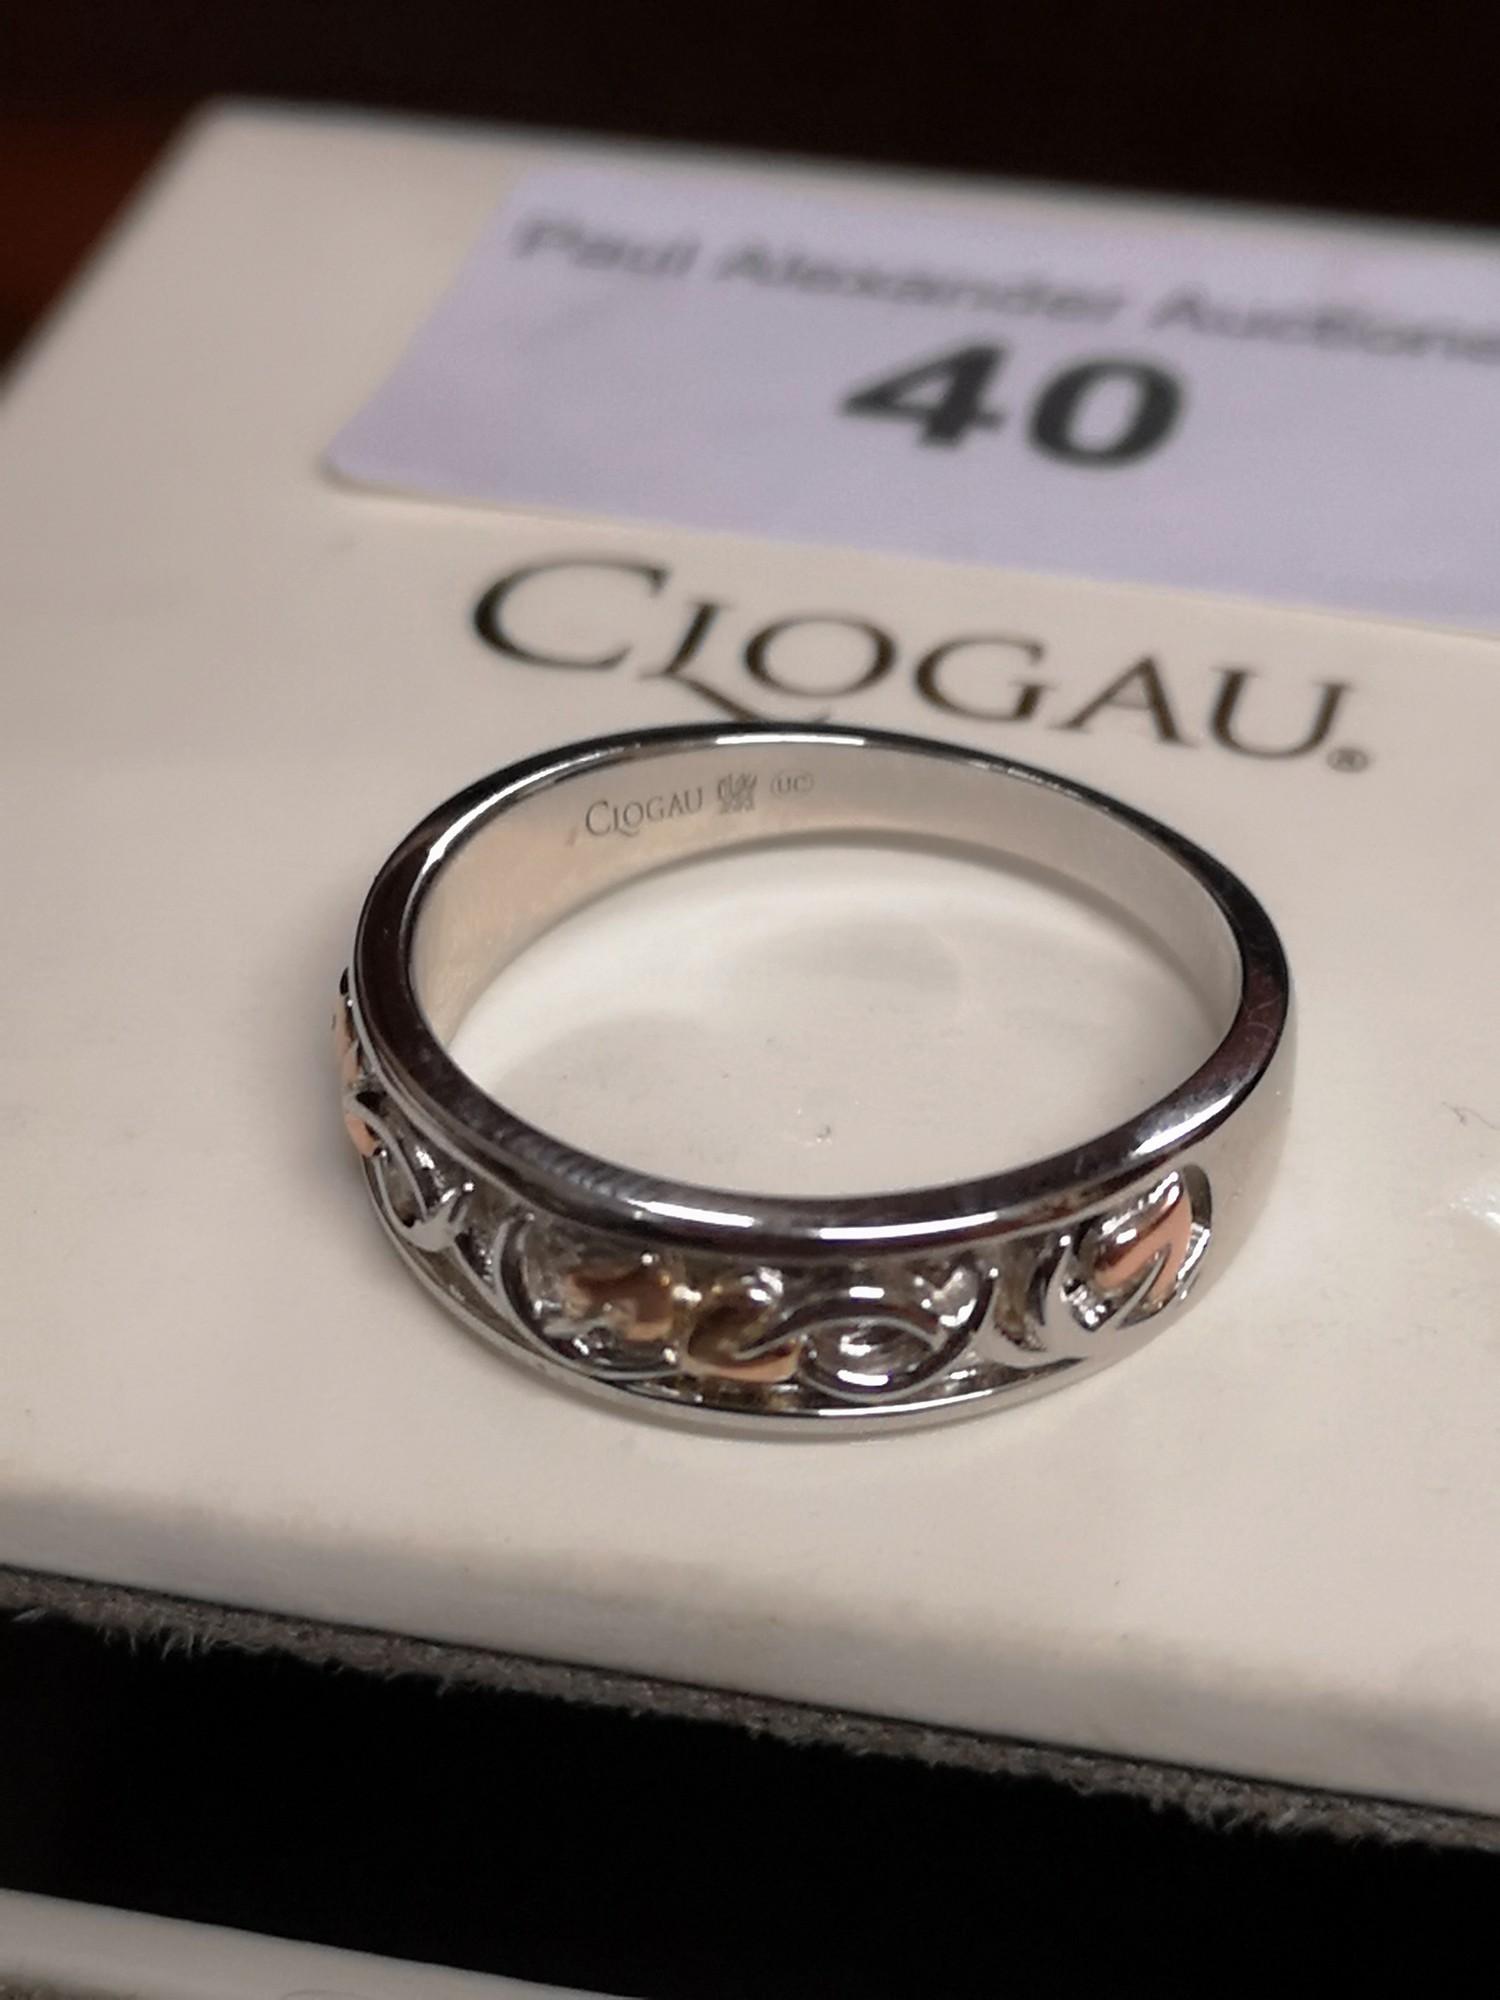 Glogau silver design ring with presentation box.